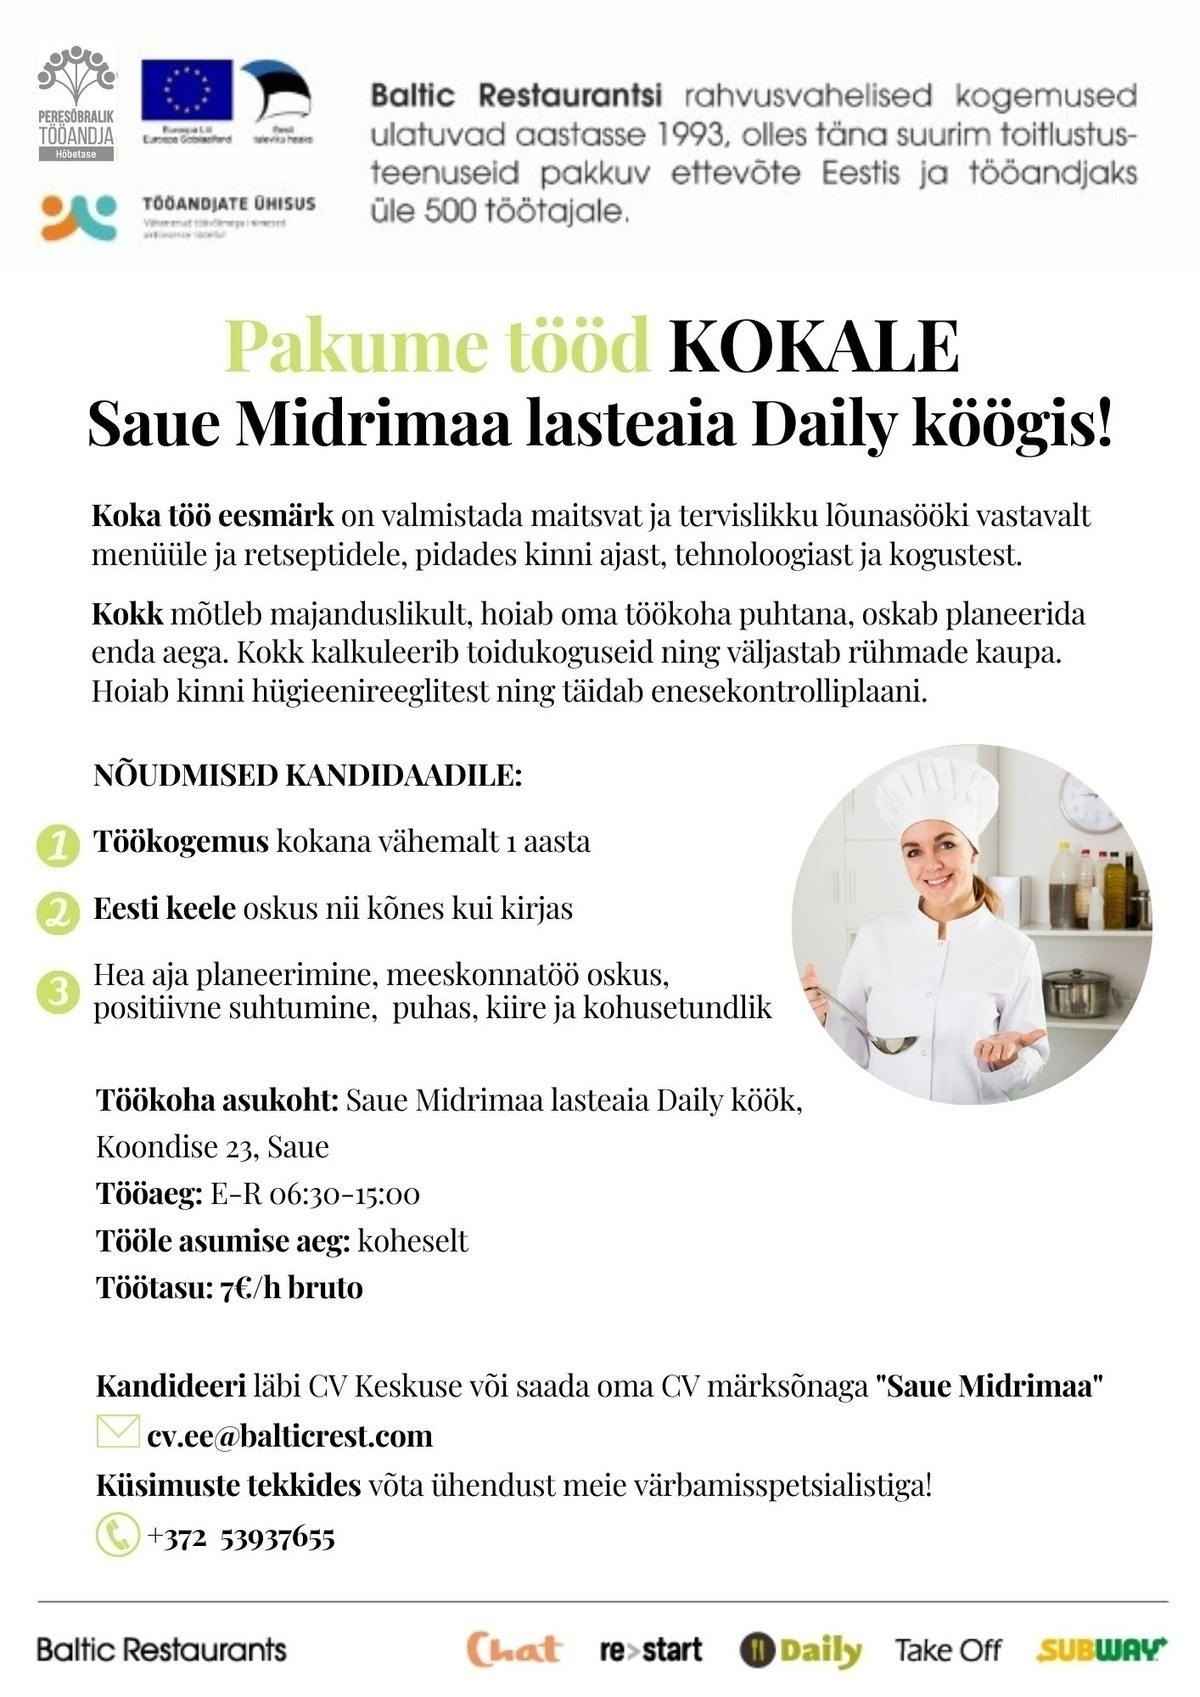 BALTIC RESTAURANTS ESTONIA AS Pakume tööd KOKALE Saue Midrimaa lasteaia Daily köögis!